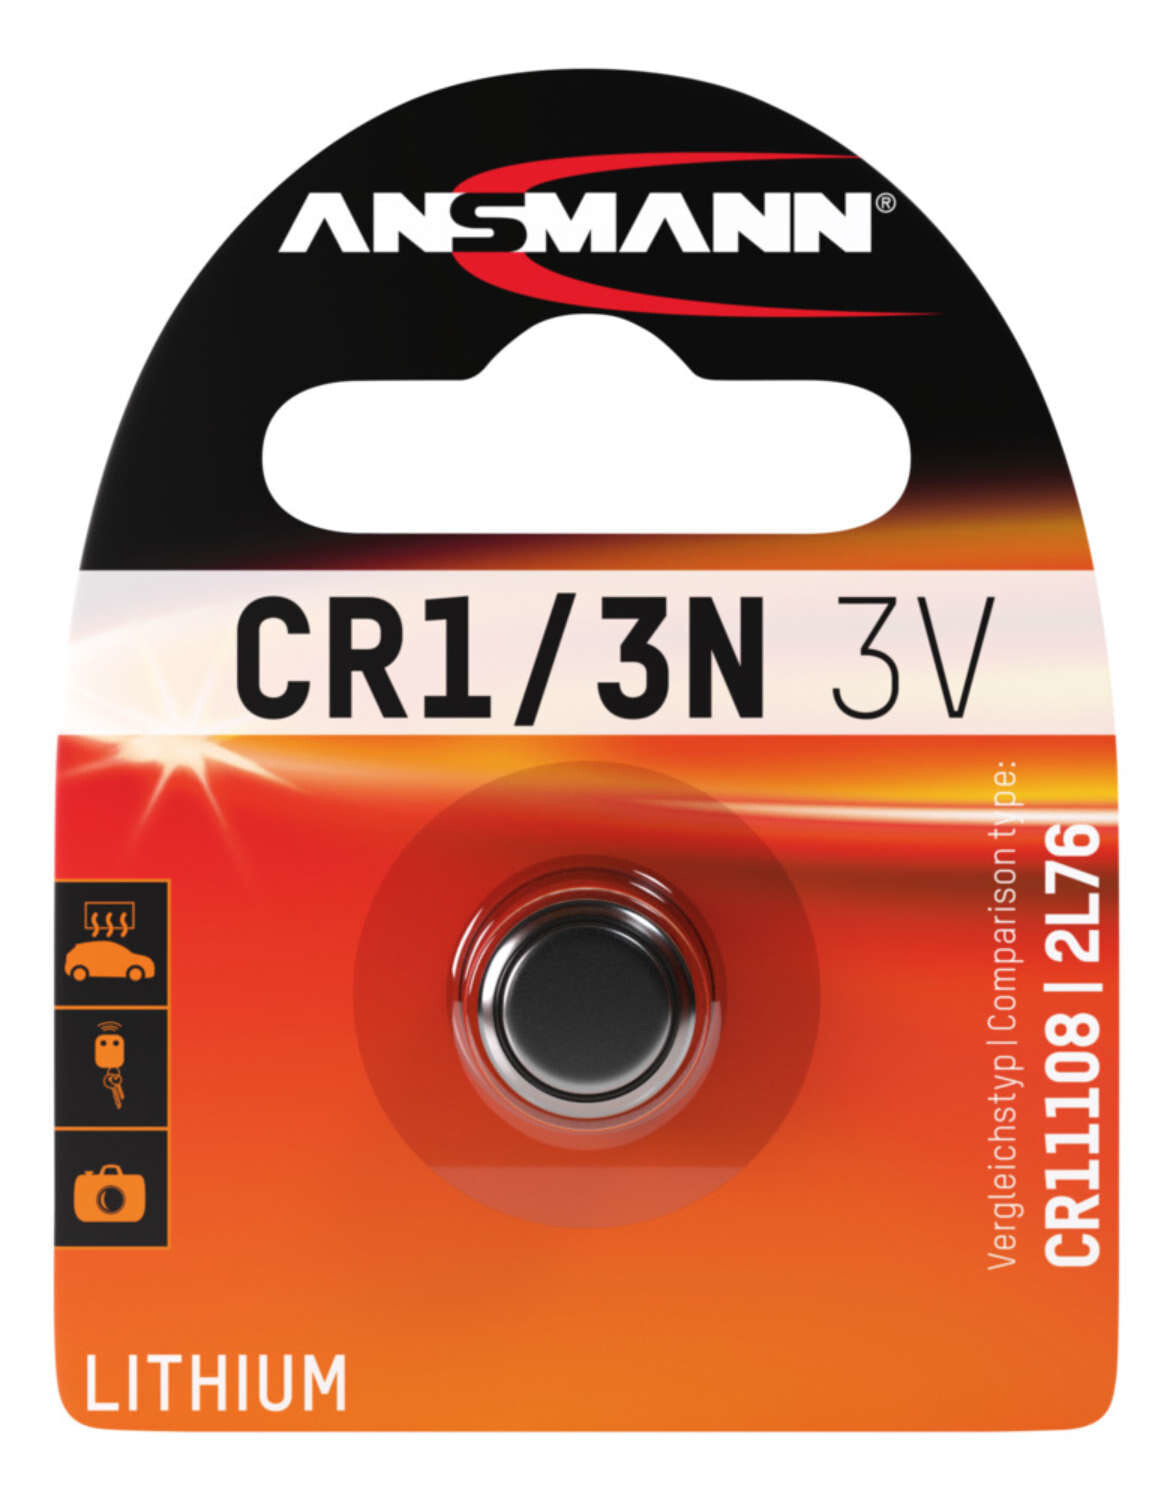 Ansmann Lithium Battery Батарейка одноразового использования 1/3N Литиевая 1516-0097